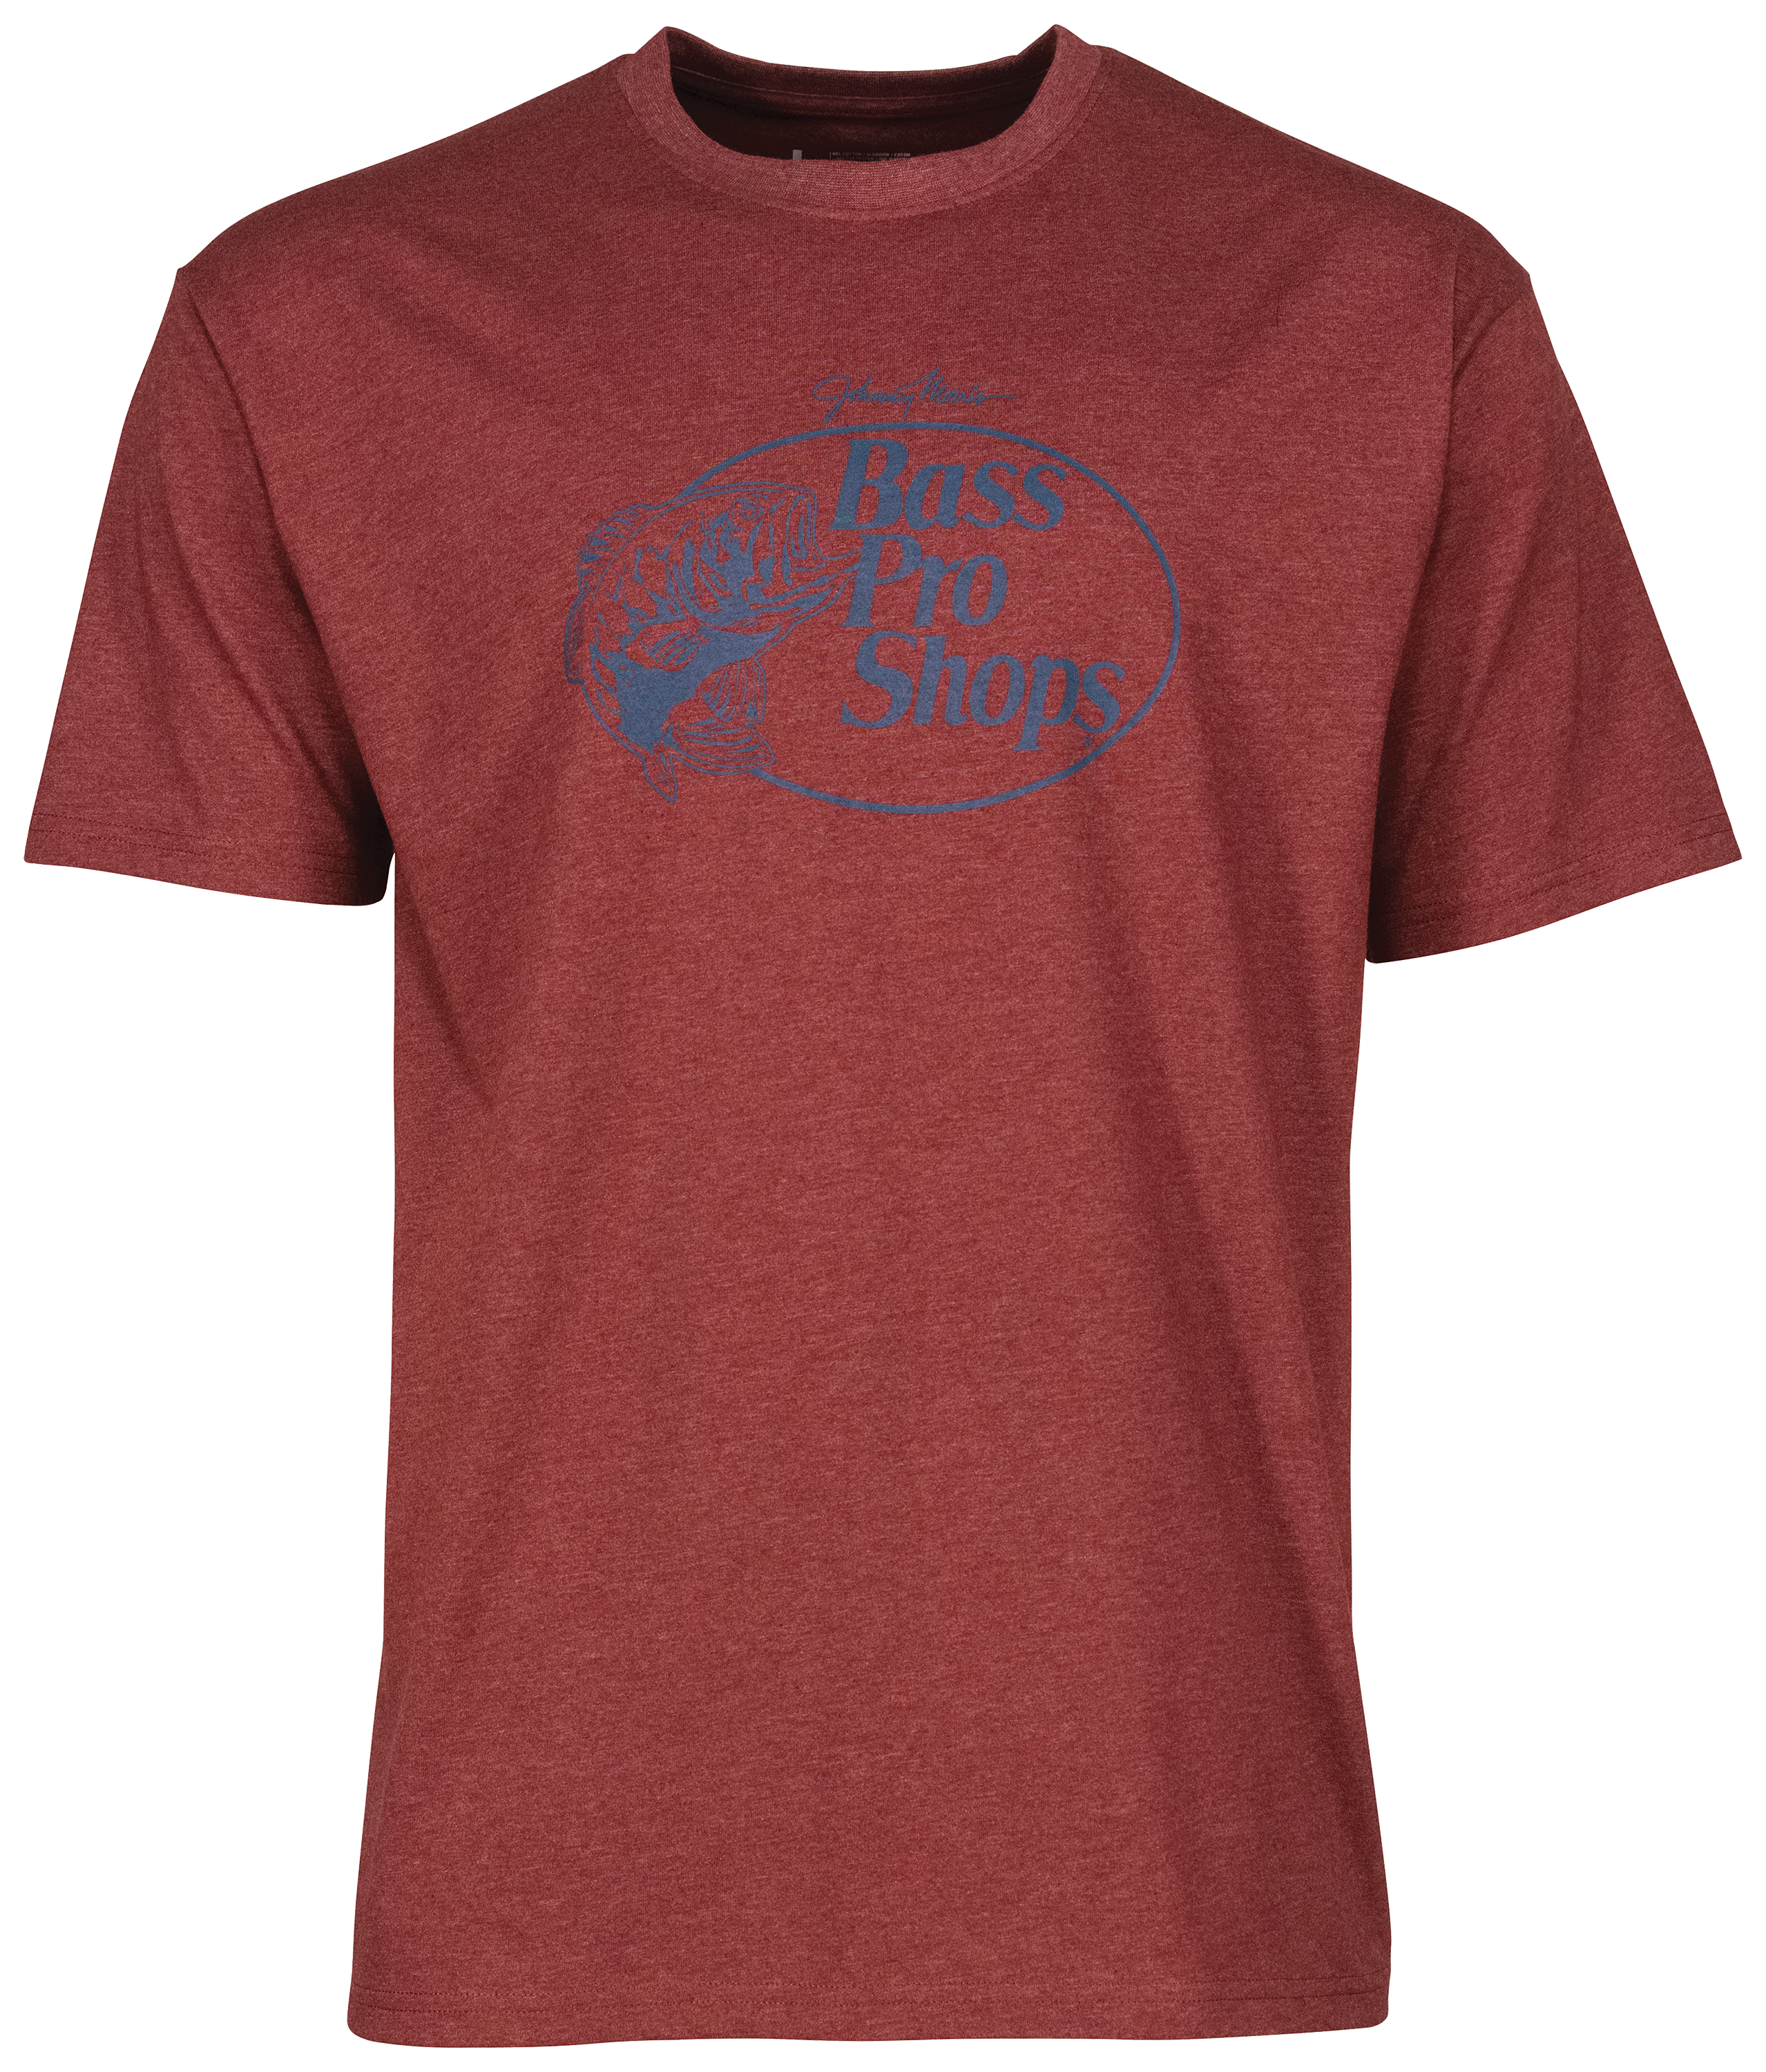 Bass Pro Shops Original Logo 2.0 Short-Sleeve T-Shirt for Men - Heather Maroon - M